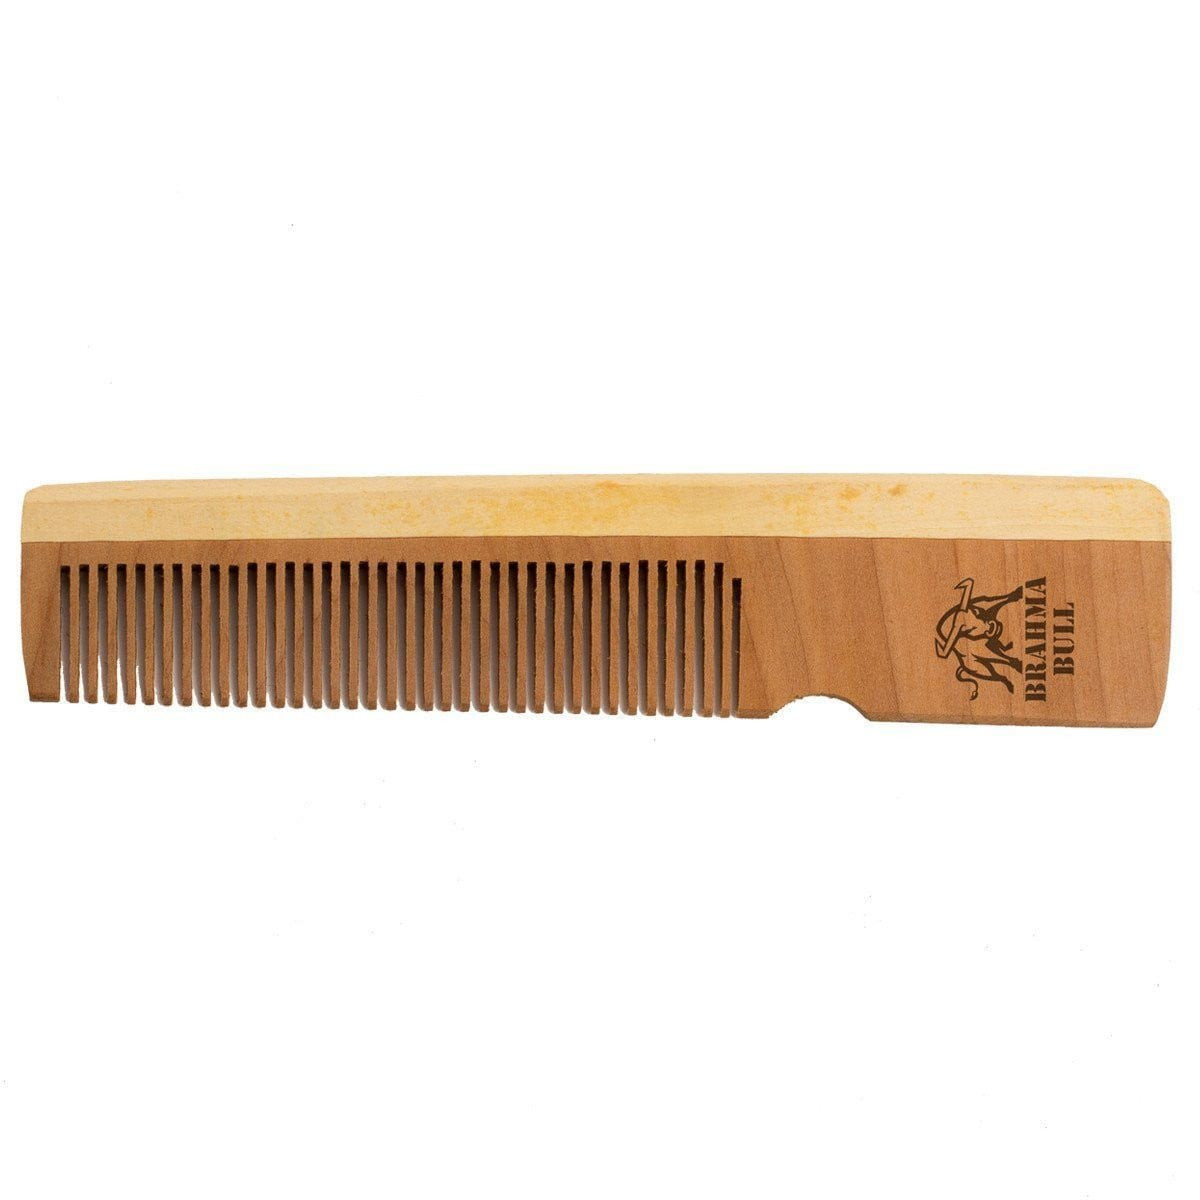 Wooden Beard Comb - Brahma Bull - Men's Grooming